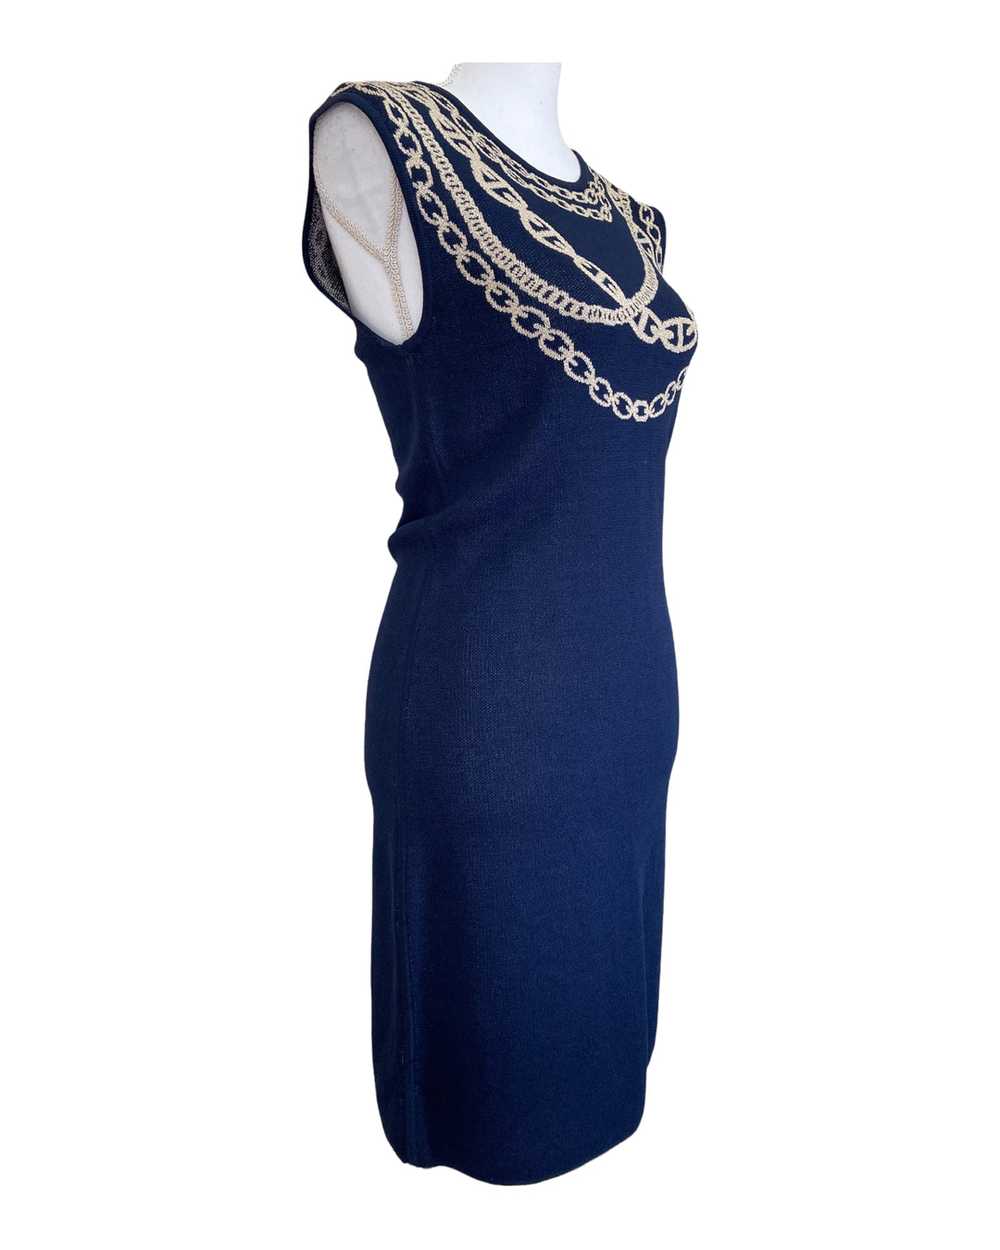 Adrienne Vittadini Navy Knit Dress, S - image 3